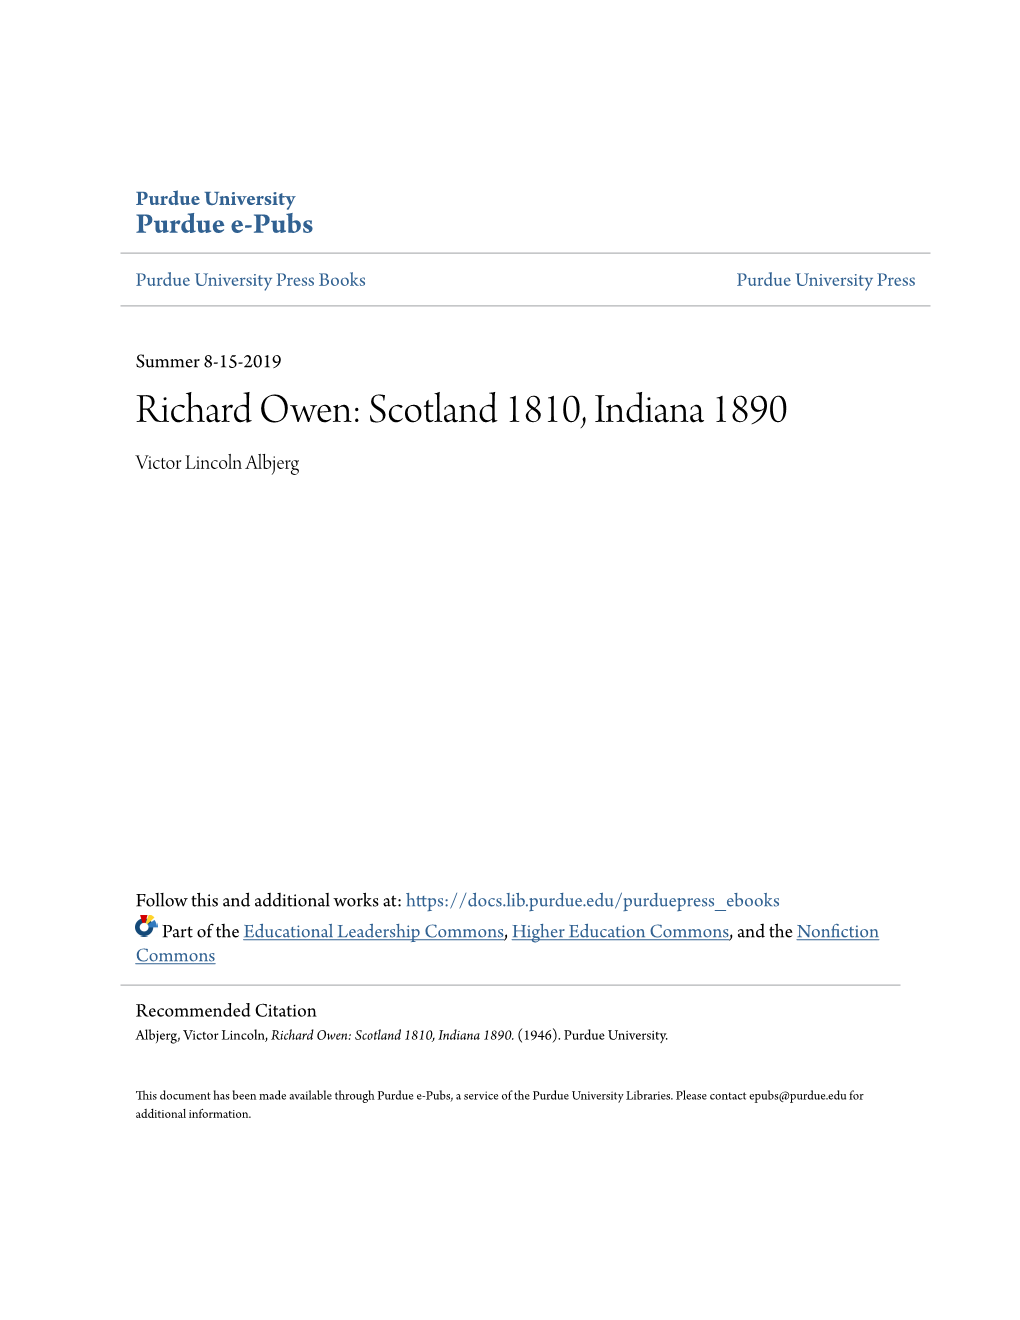 Richard Owen: Scotland 1810, Indiana 1890 Victor Lincoln Albjerg